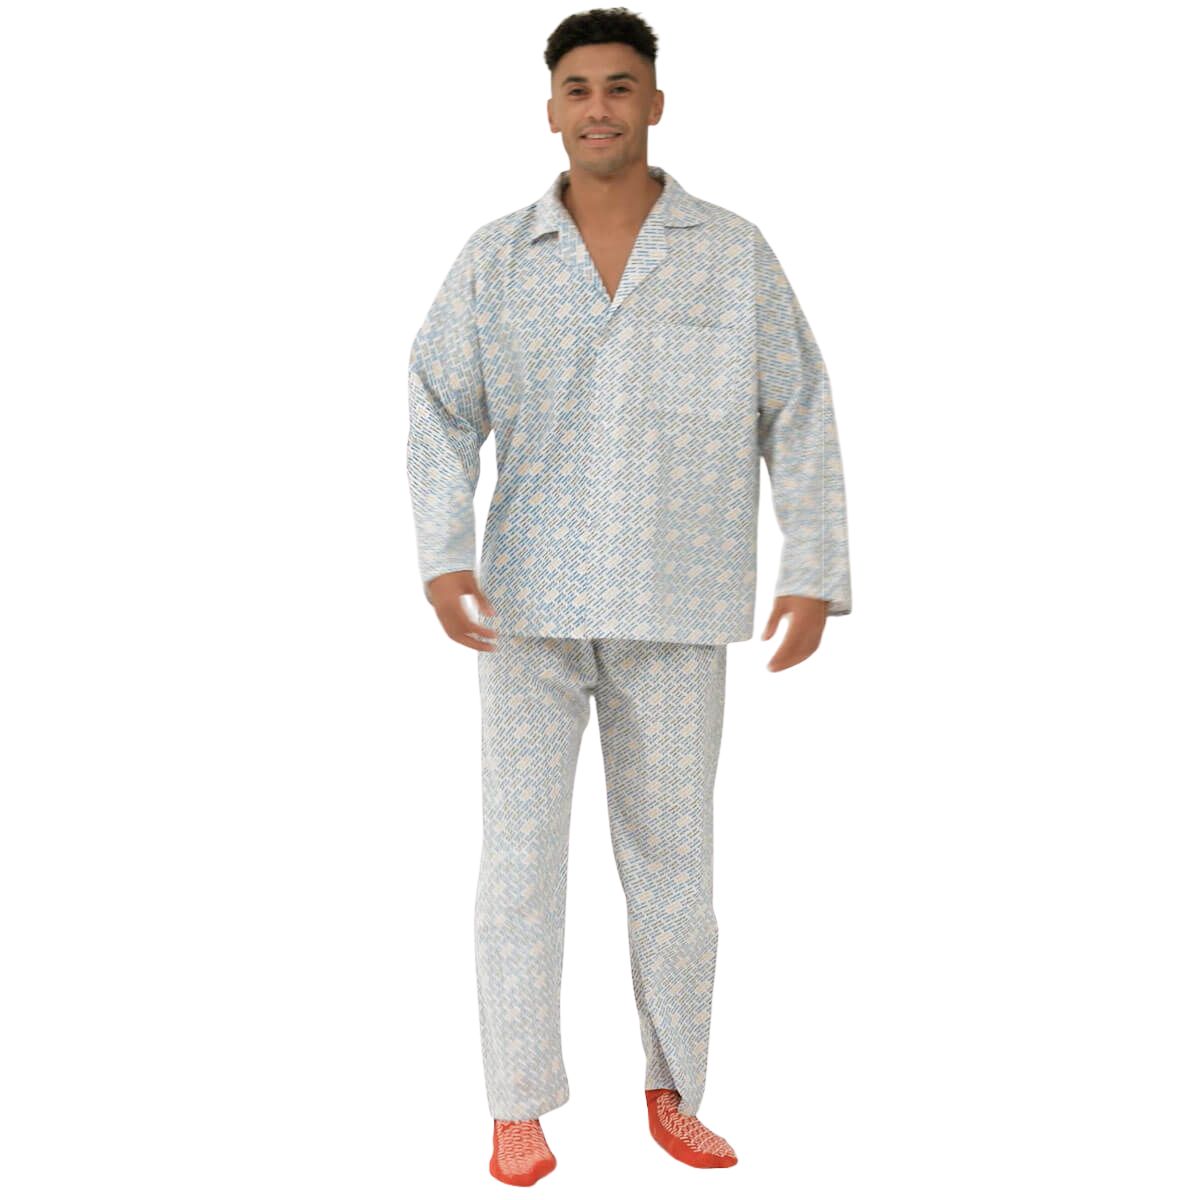 Hospital pyjama trousers